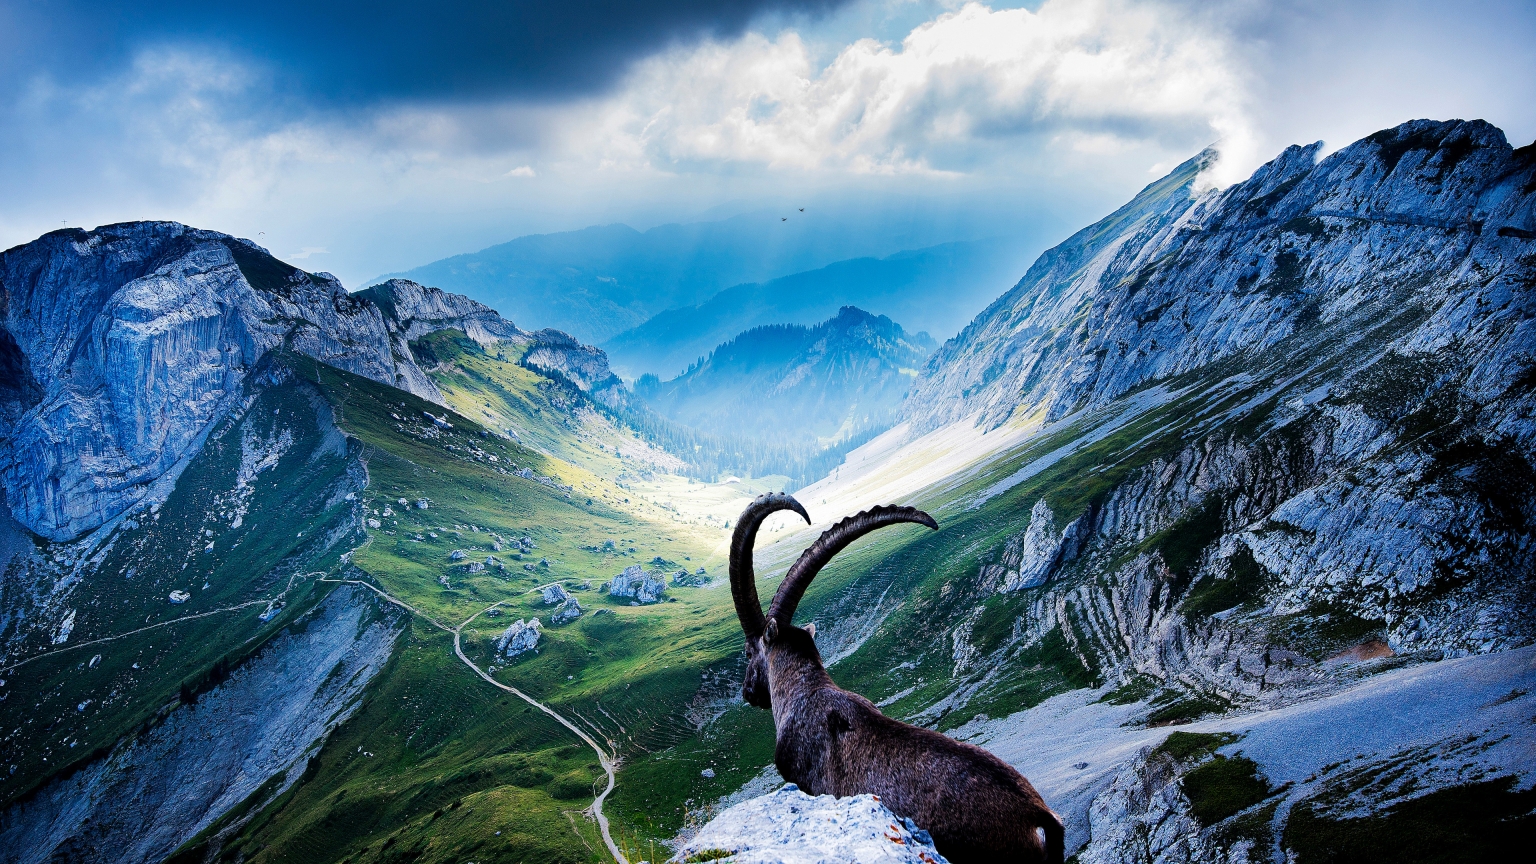 Goat at Mount Pilatus for 1536 x 864 HDTV resolution